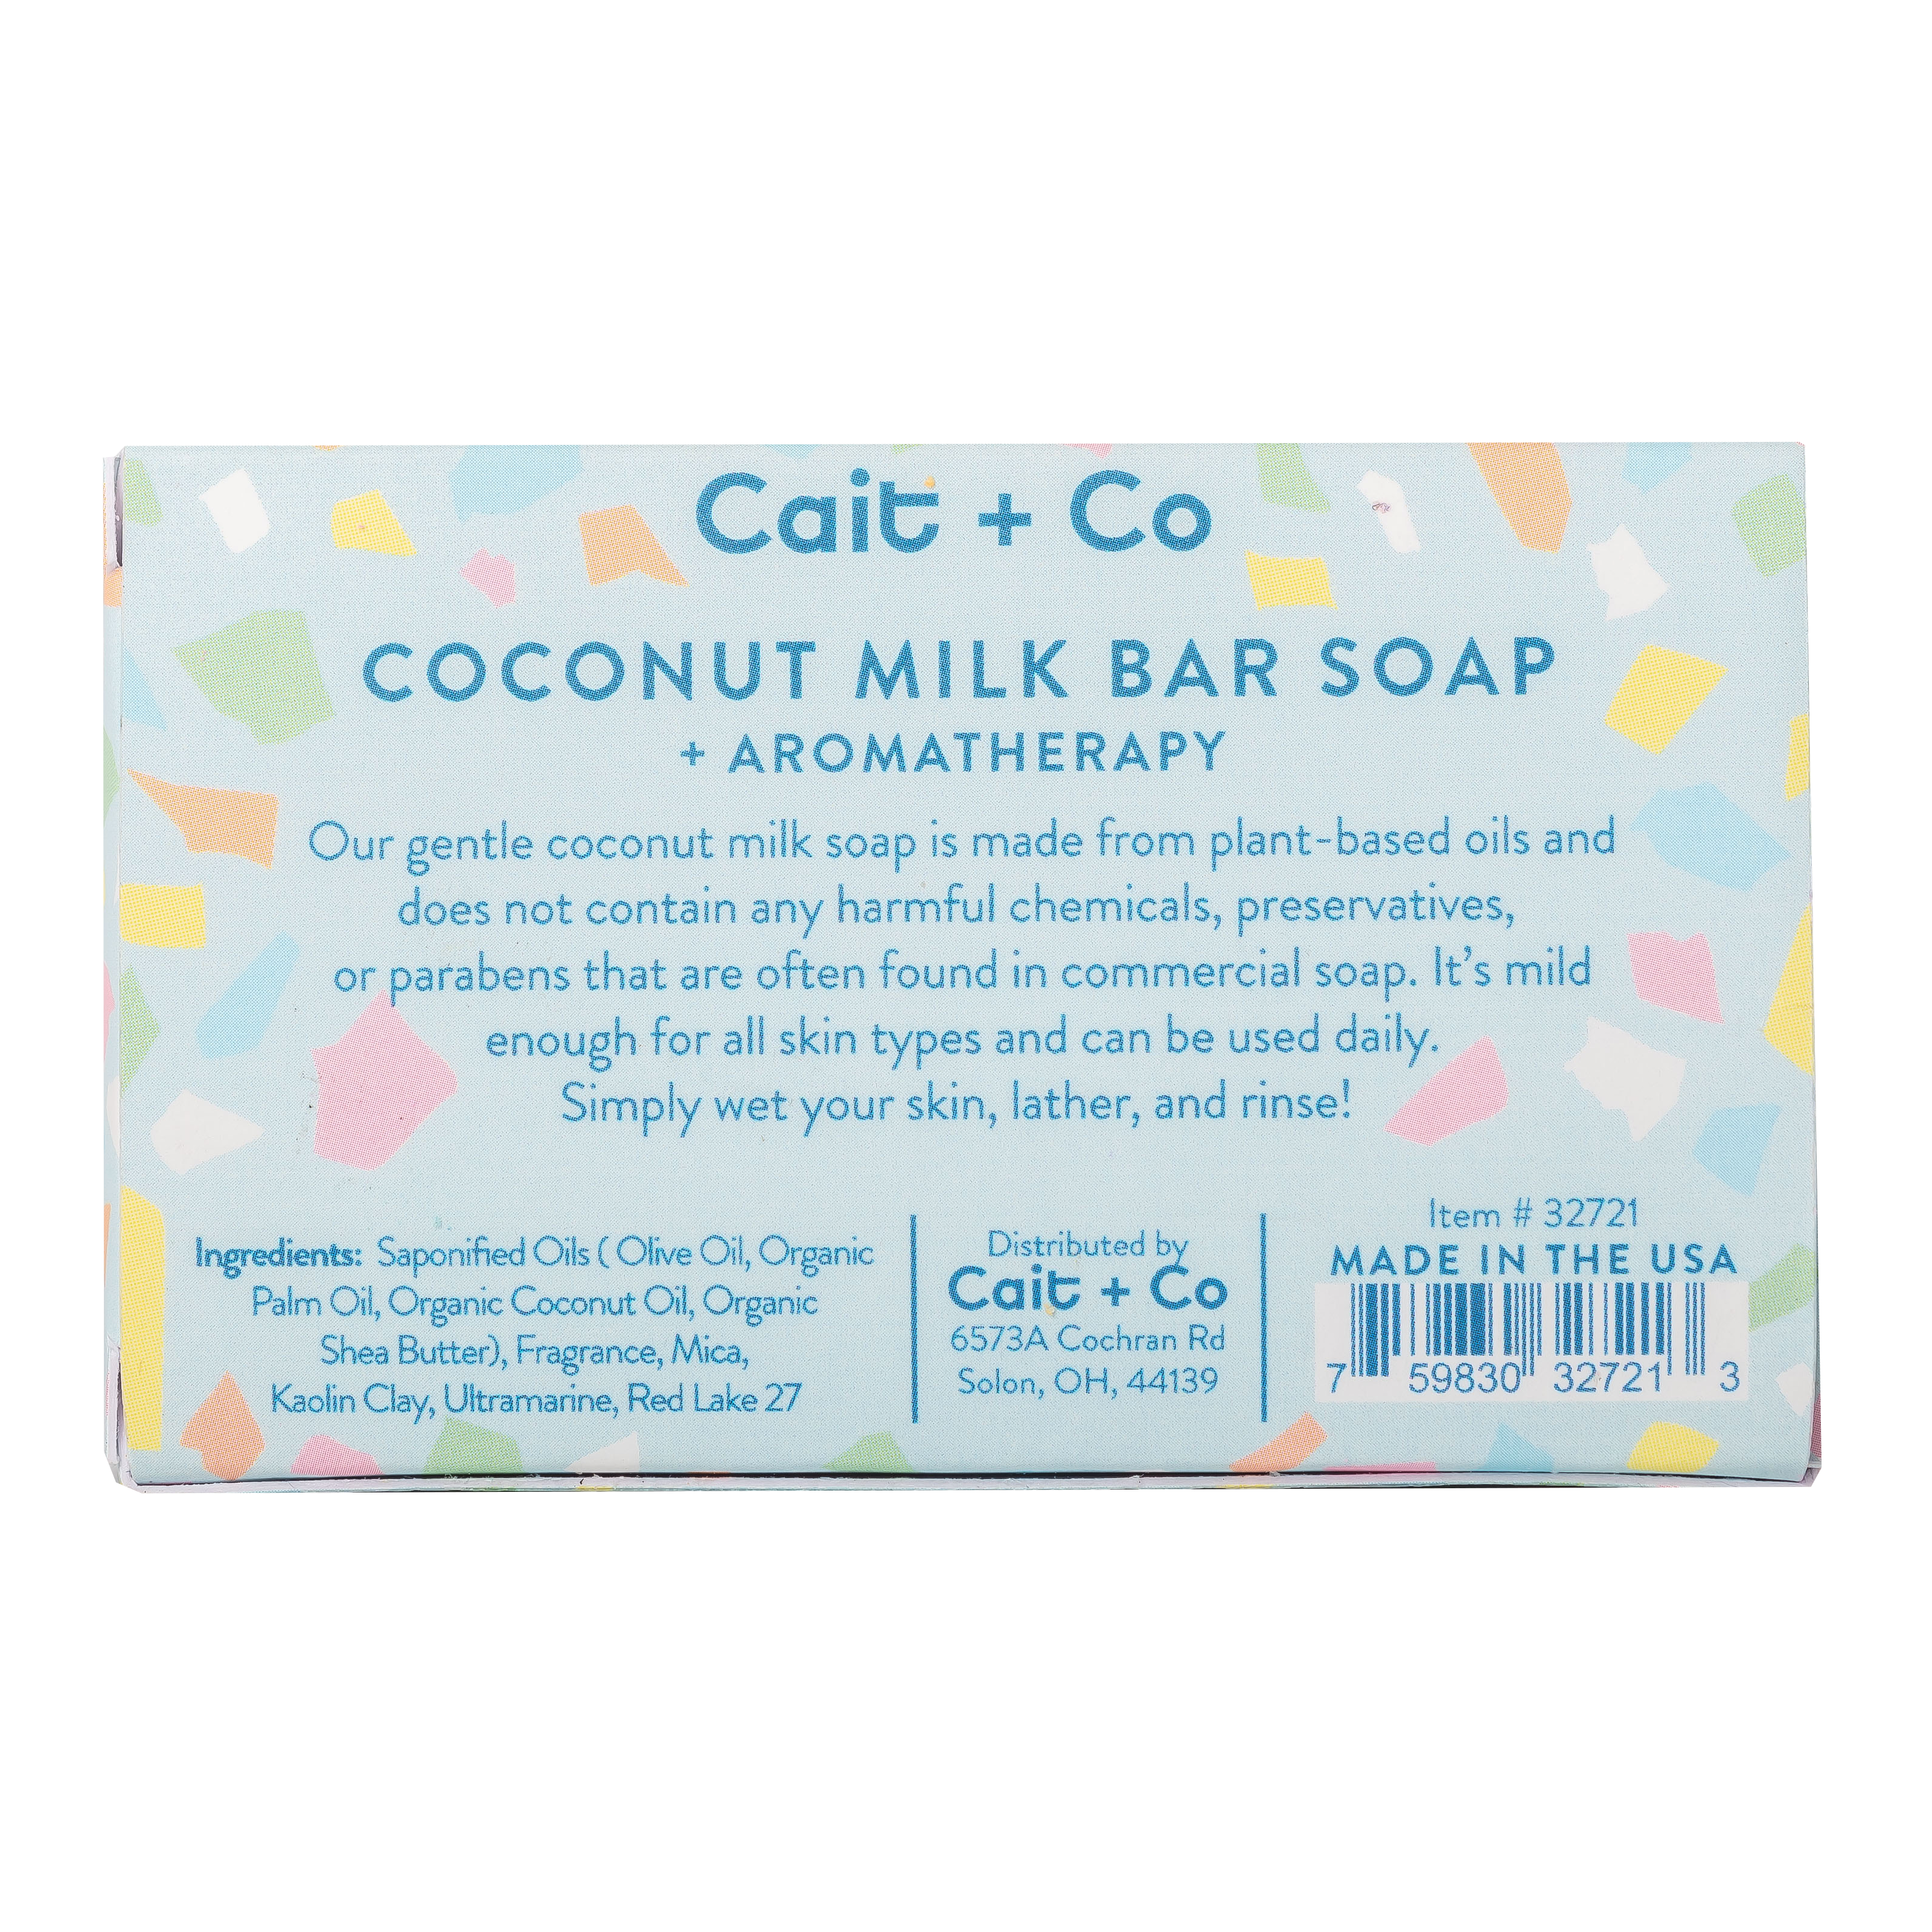 Sapphire - Coconut Milk Bar Soap